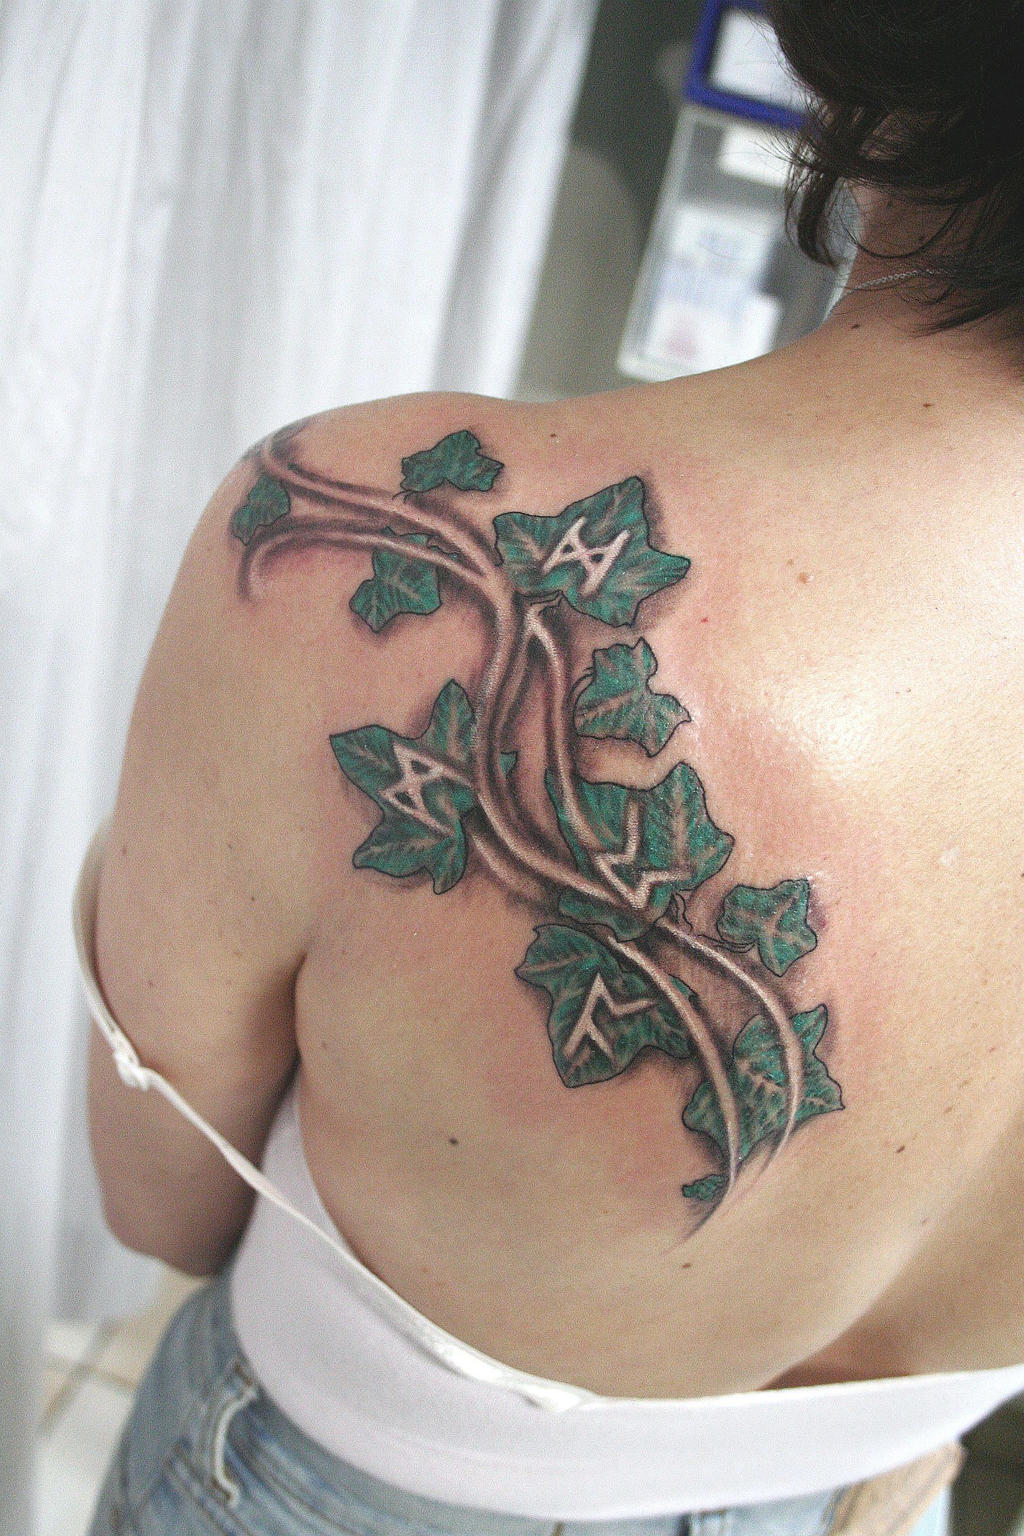 Ivy climbs runes Tattoo by